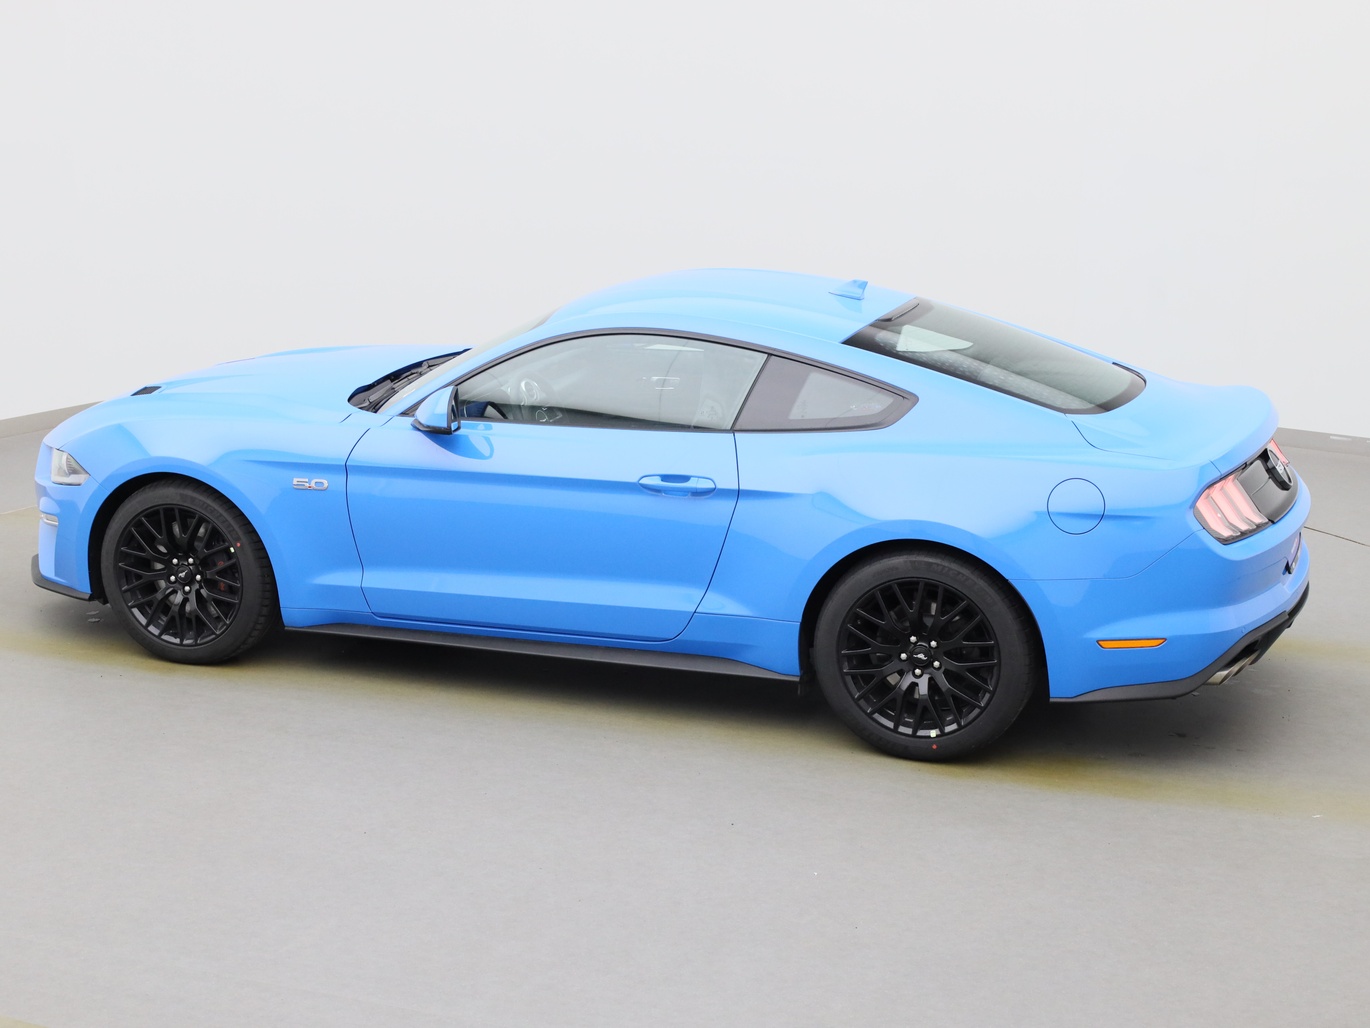  Ford Mustang GT Coupé V8 450PS / Premium 2 / Recaro in Grabber Blue 